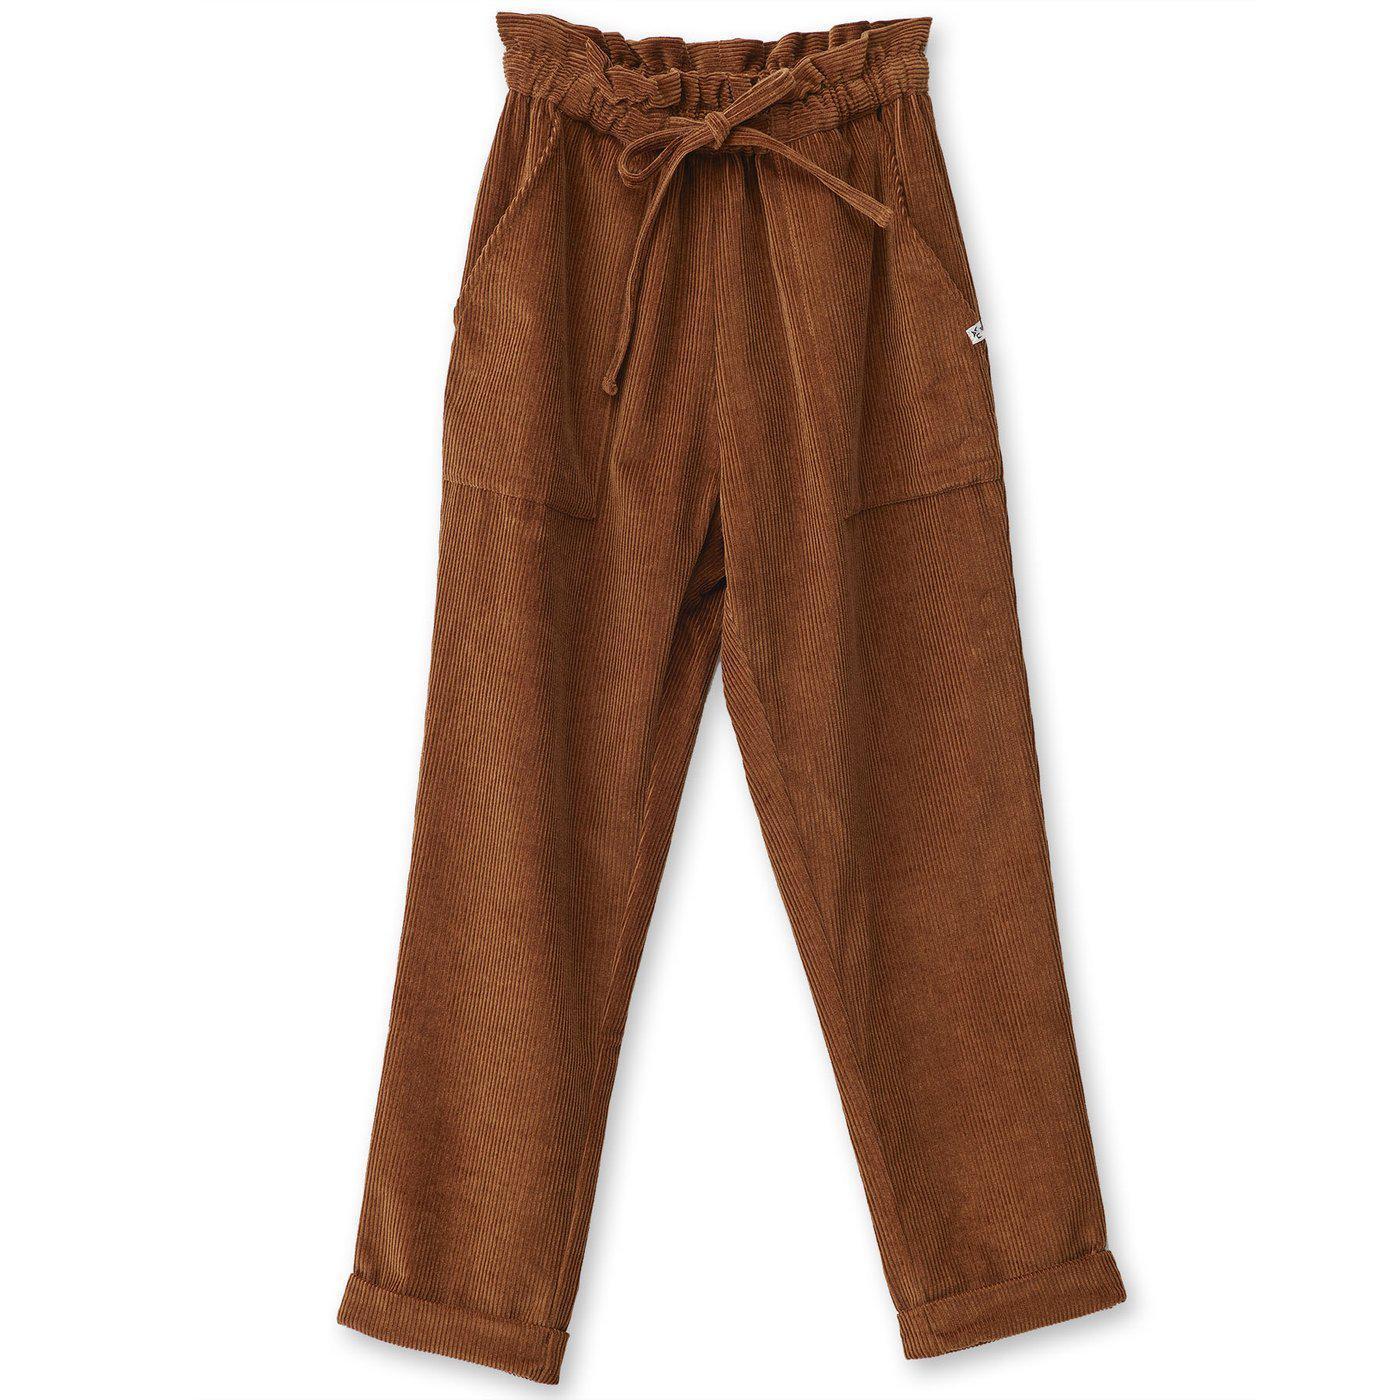  AIUKE Women's Pants Zipper Fly Corduroy Pants Women's Pants  (Color : Brown, Size : Large) : Clothing, Shoes & Jewelry